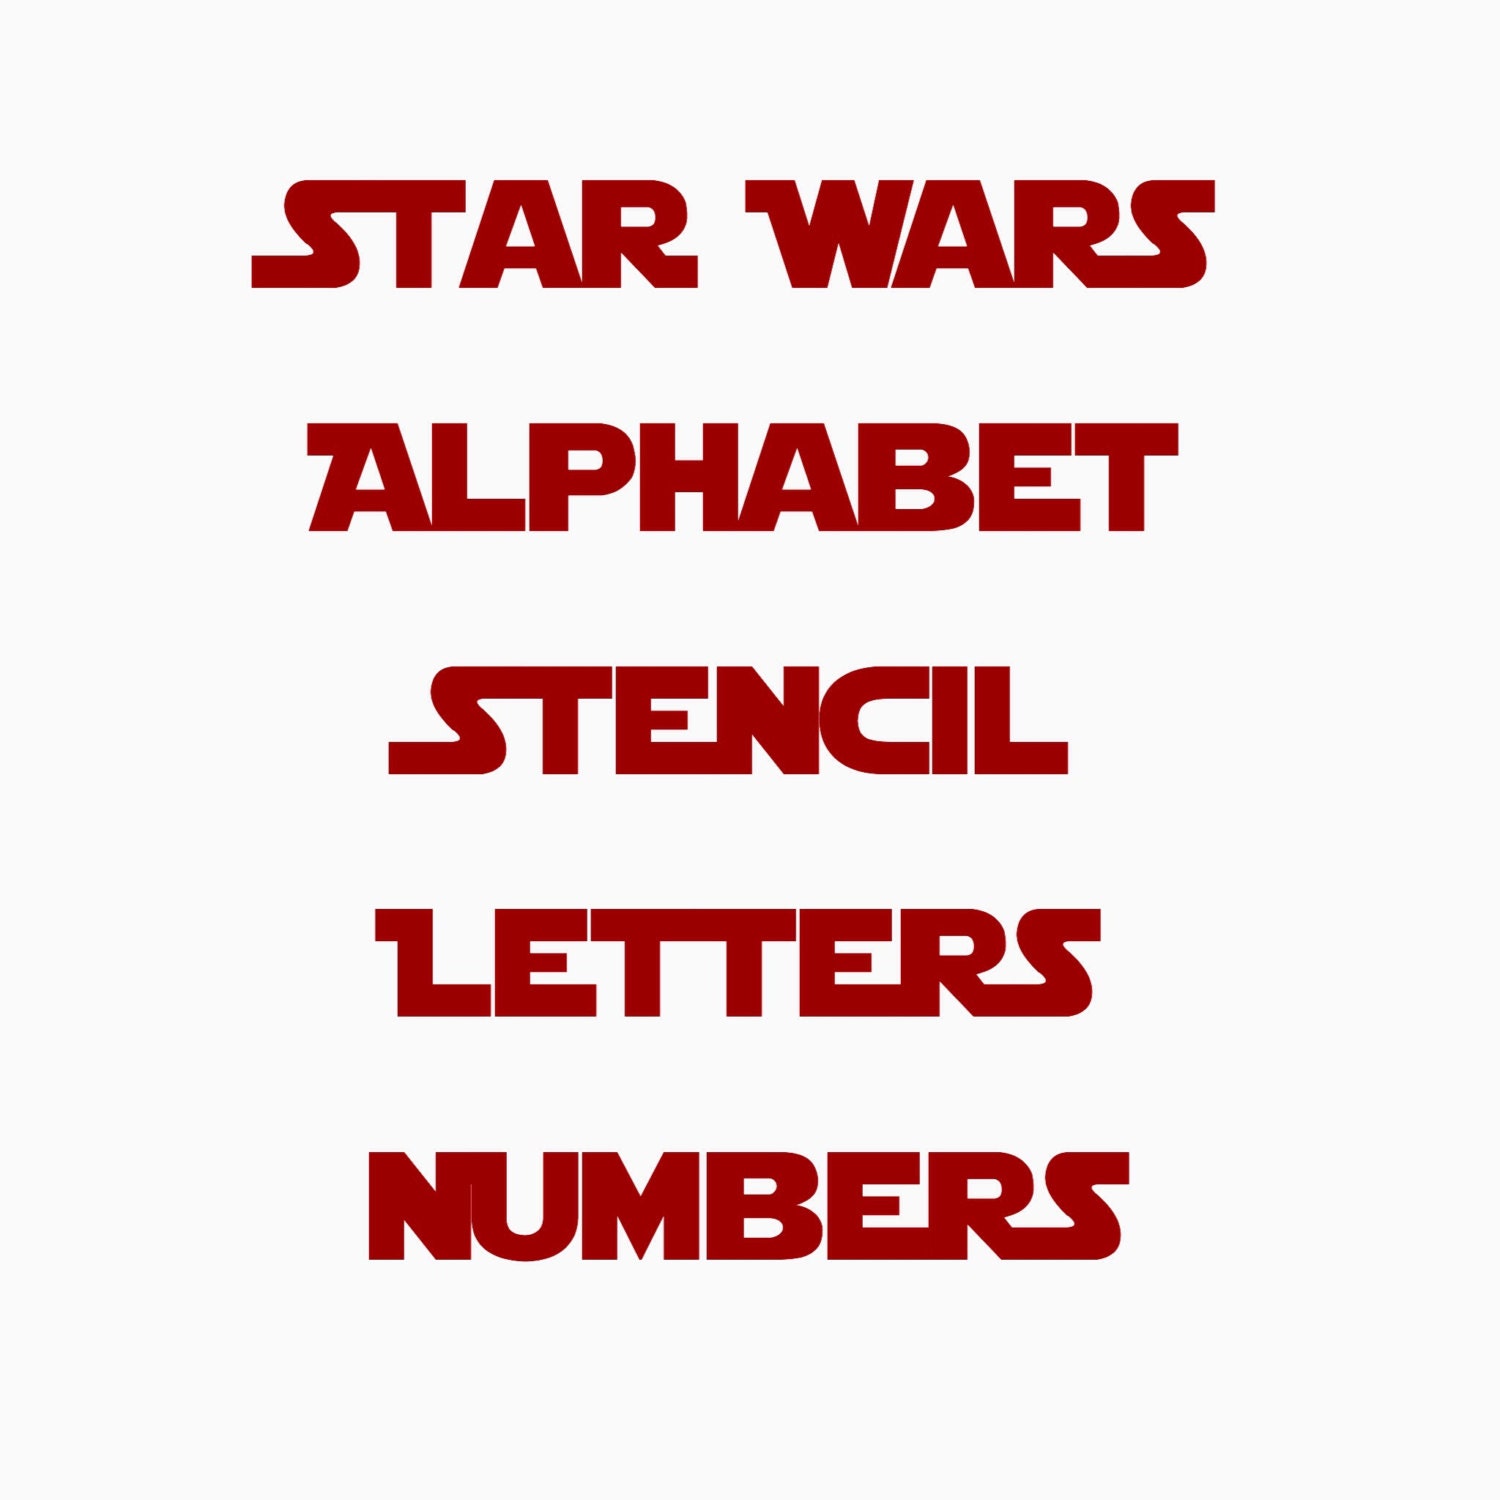 star wars writing font